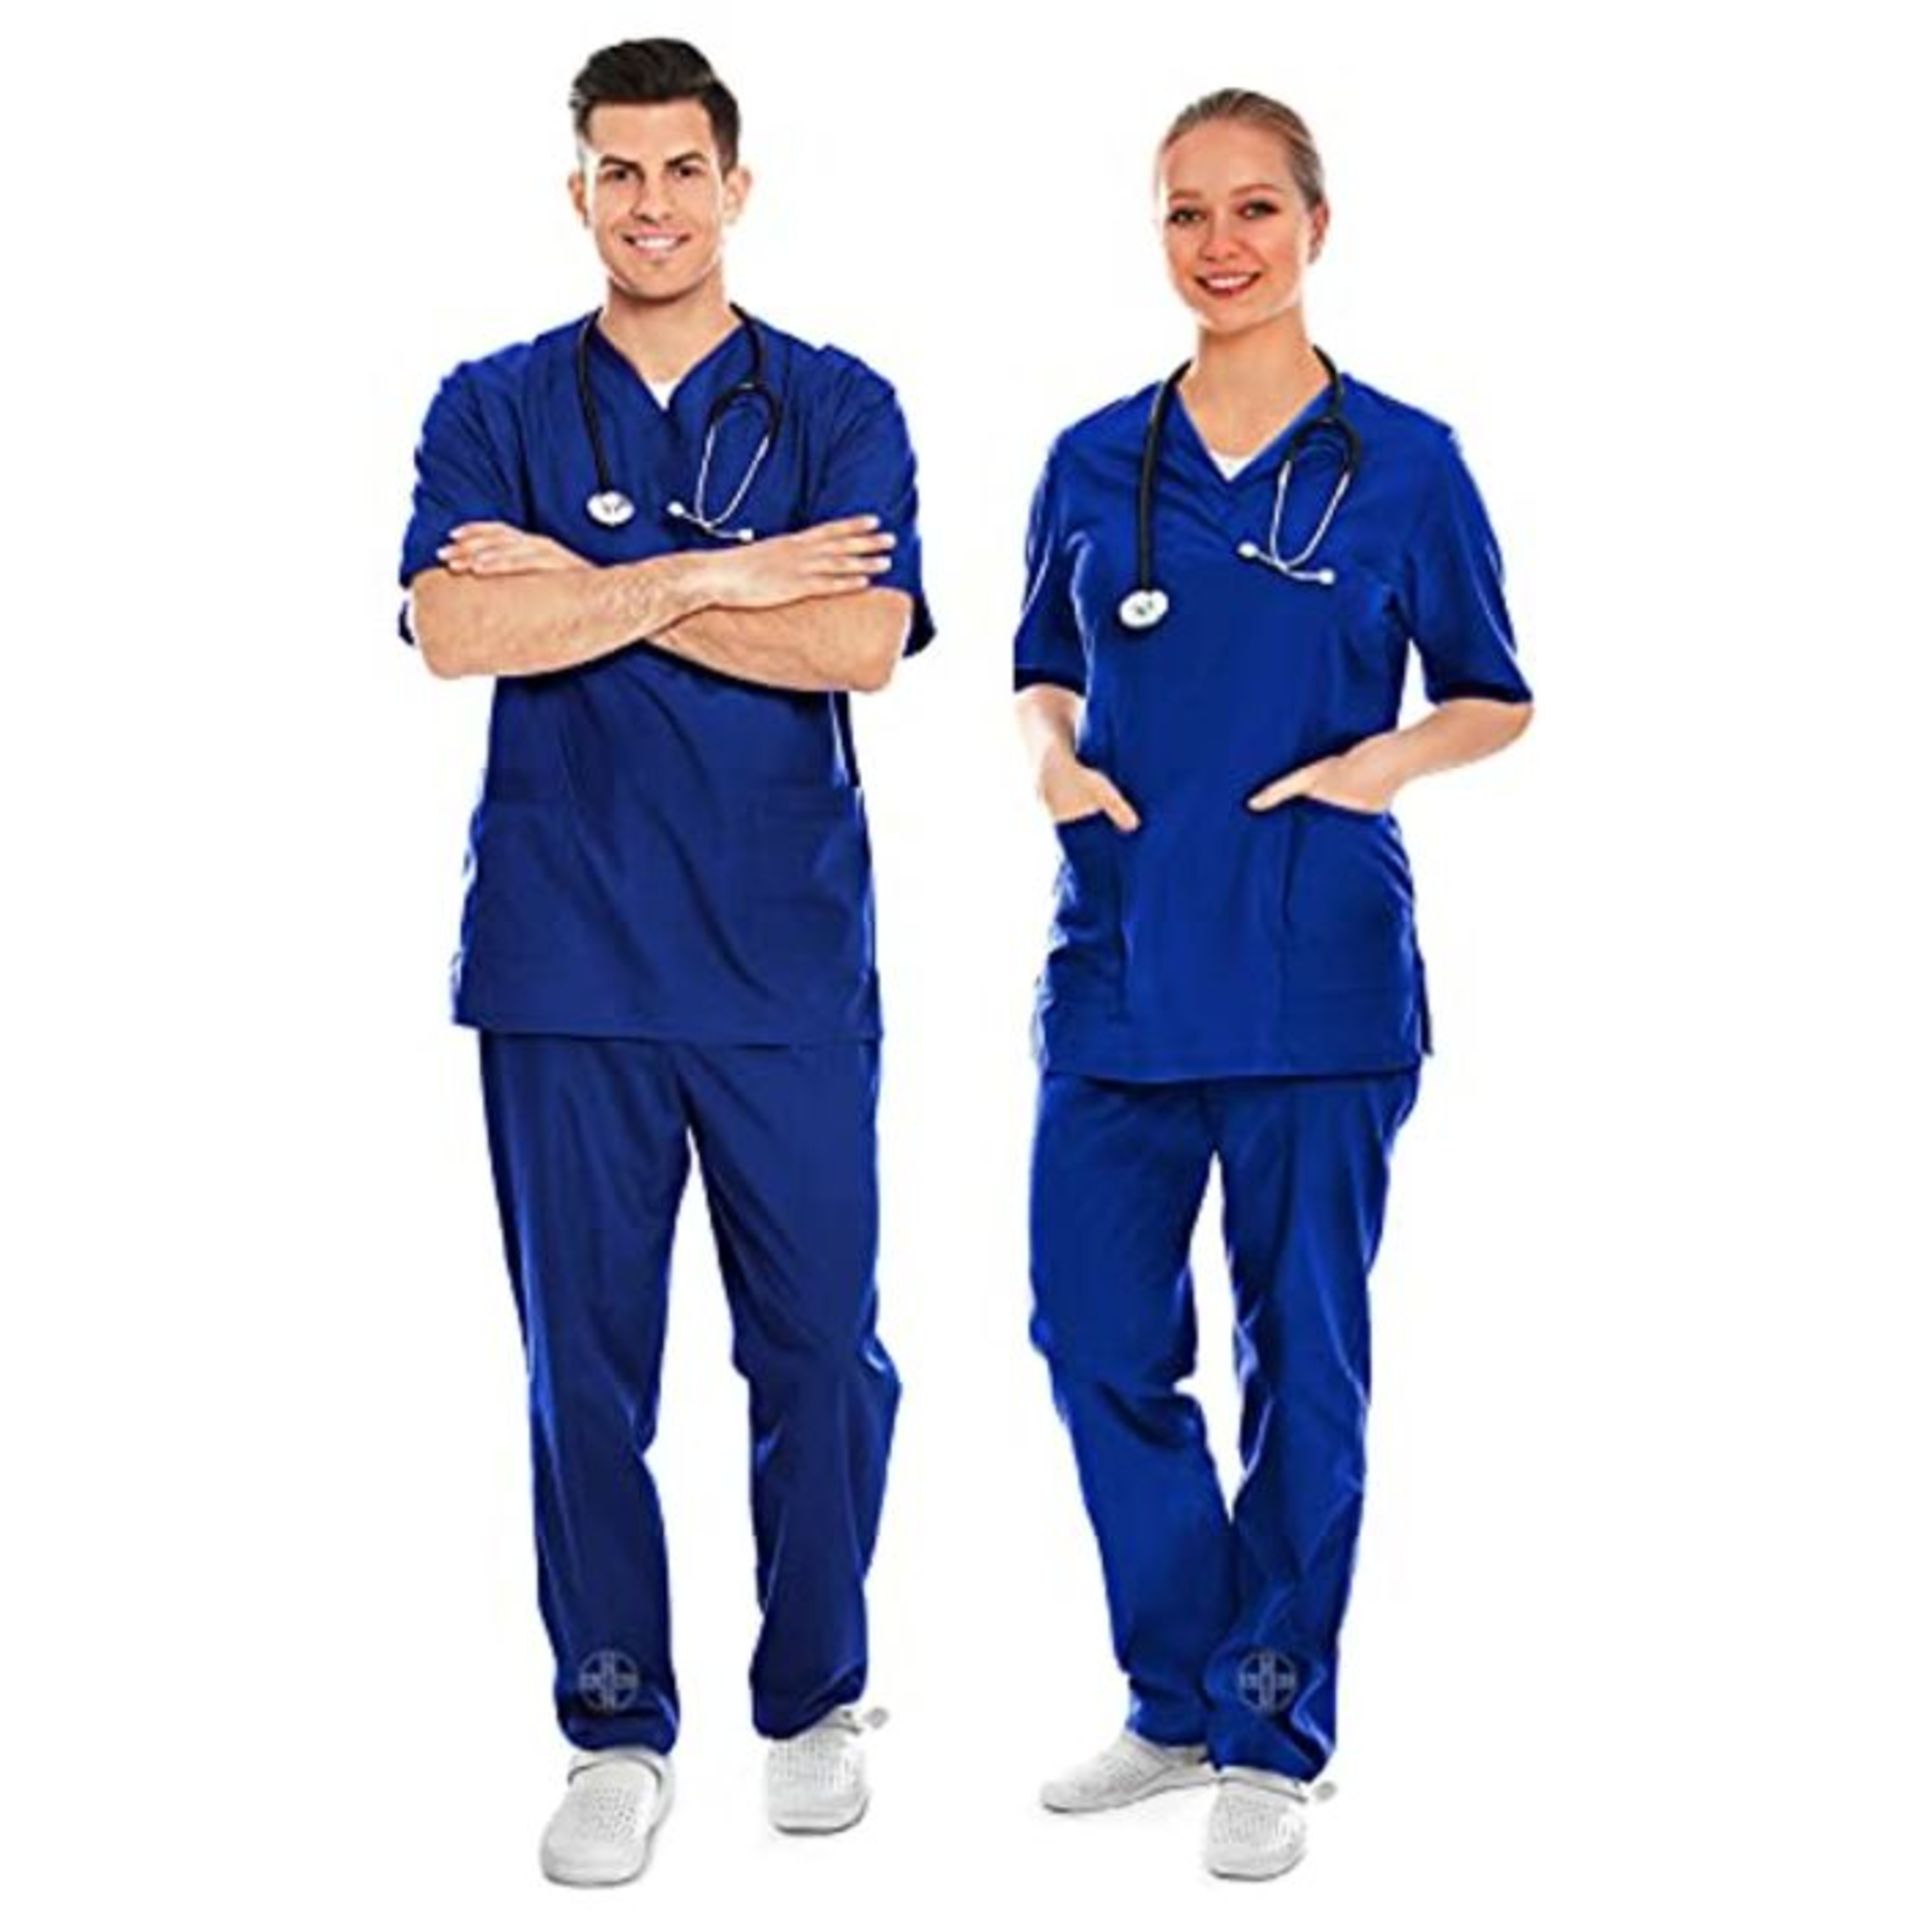 AIESI® Medical Uniform for Men and Women 100% sanforized Cotton Pant and V-Neck Scrub